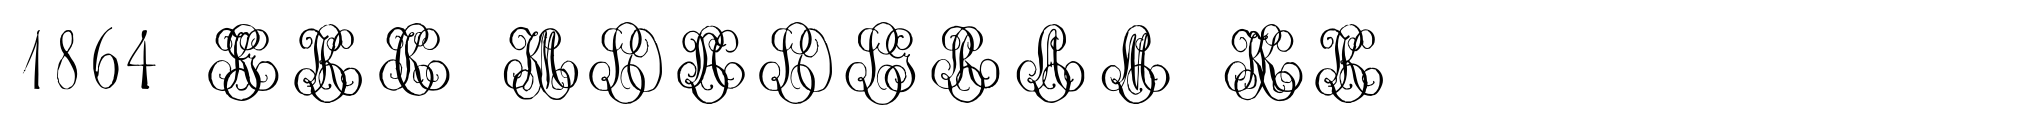 1864 GLC Monogram KL image